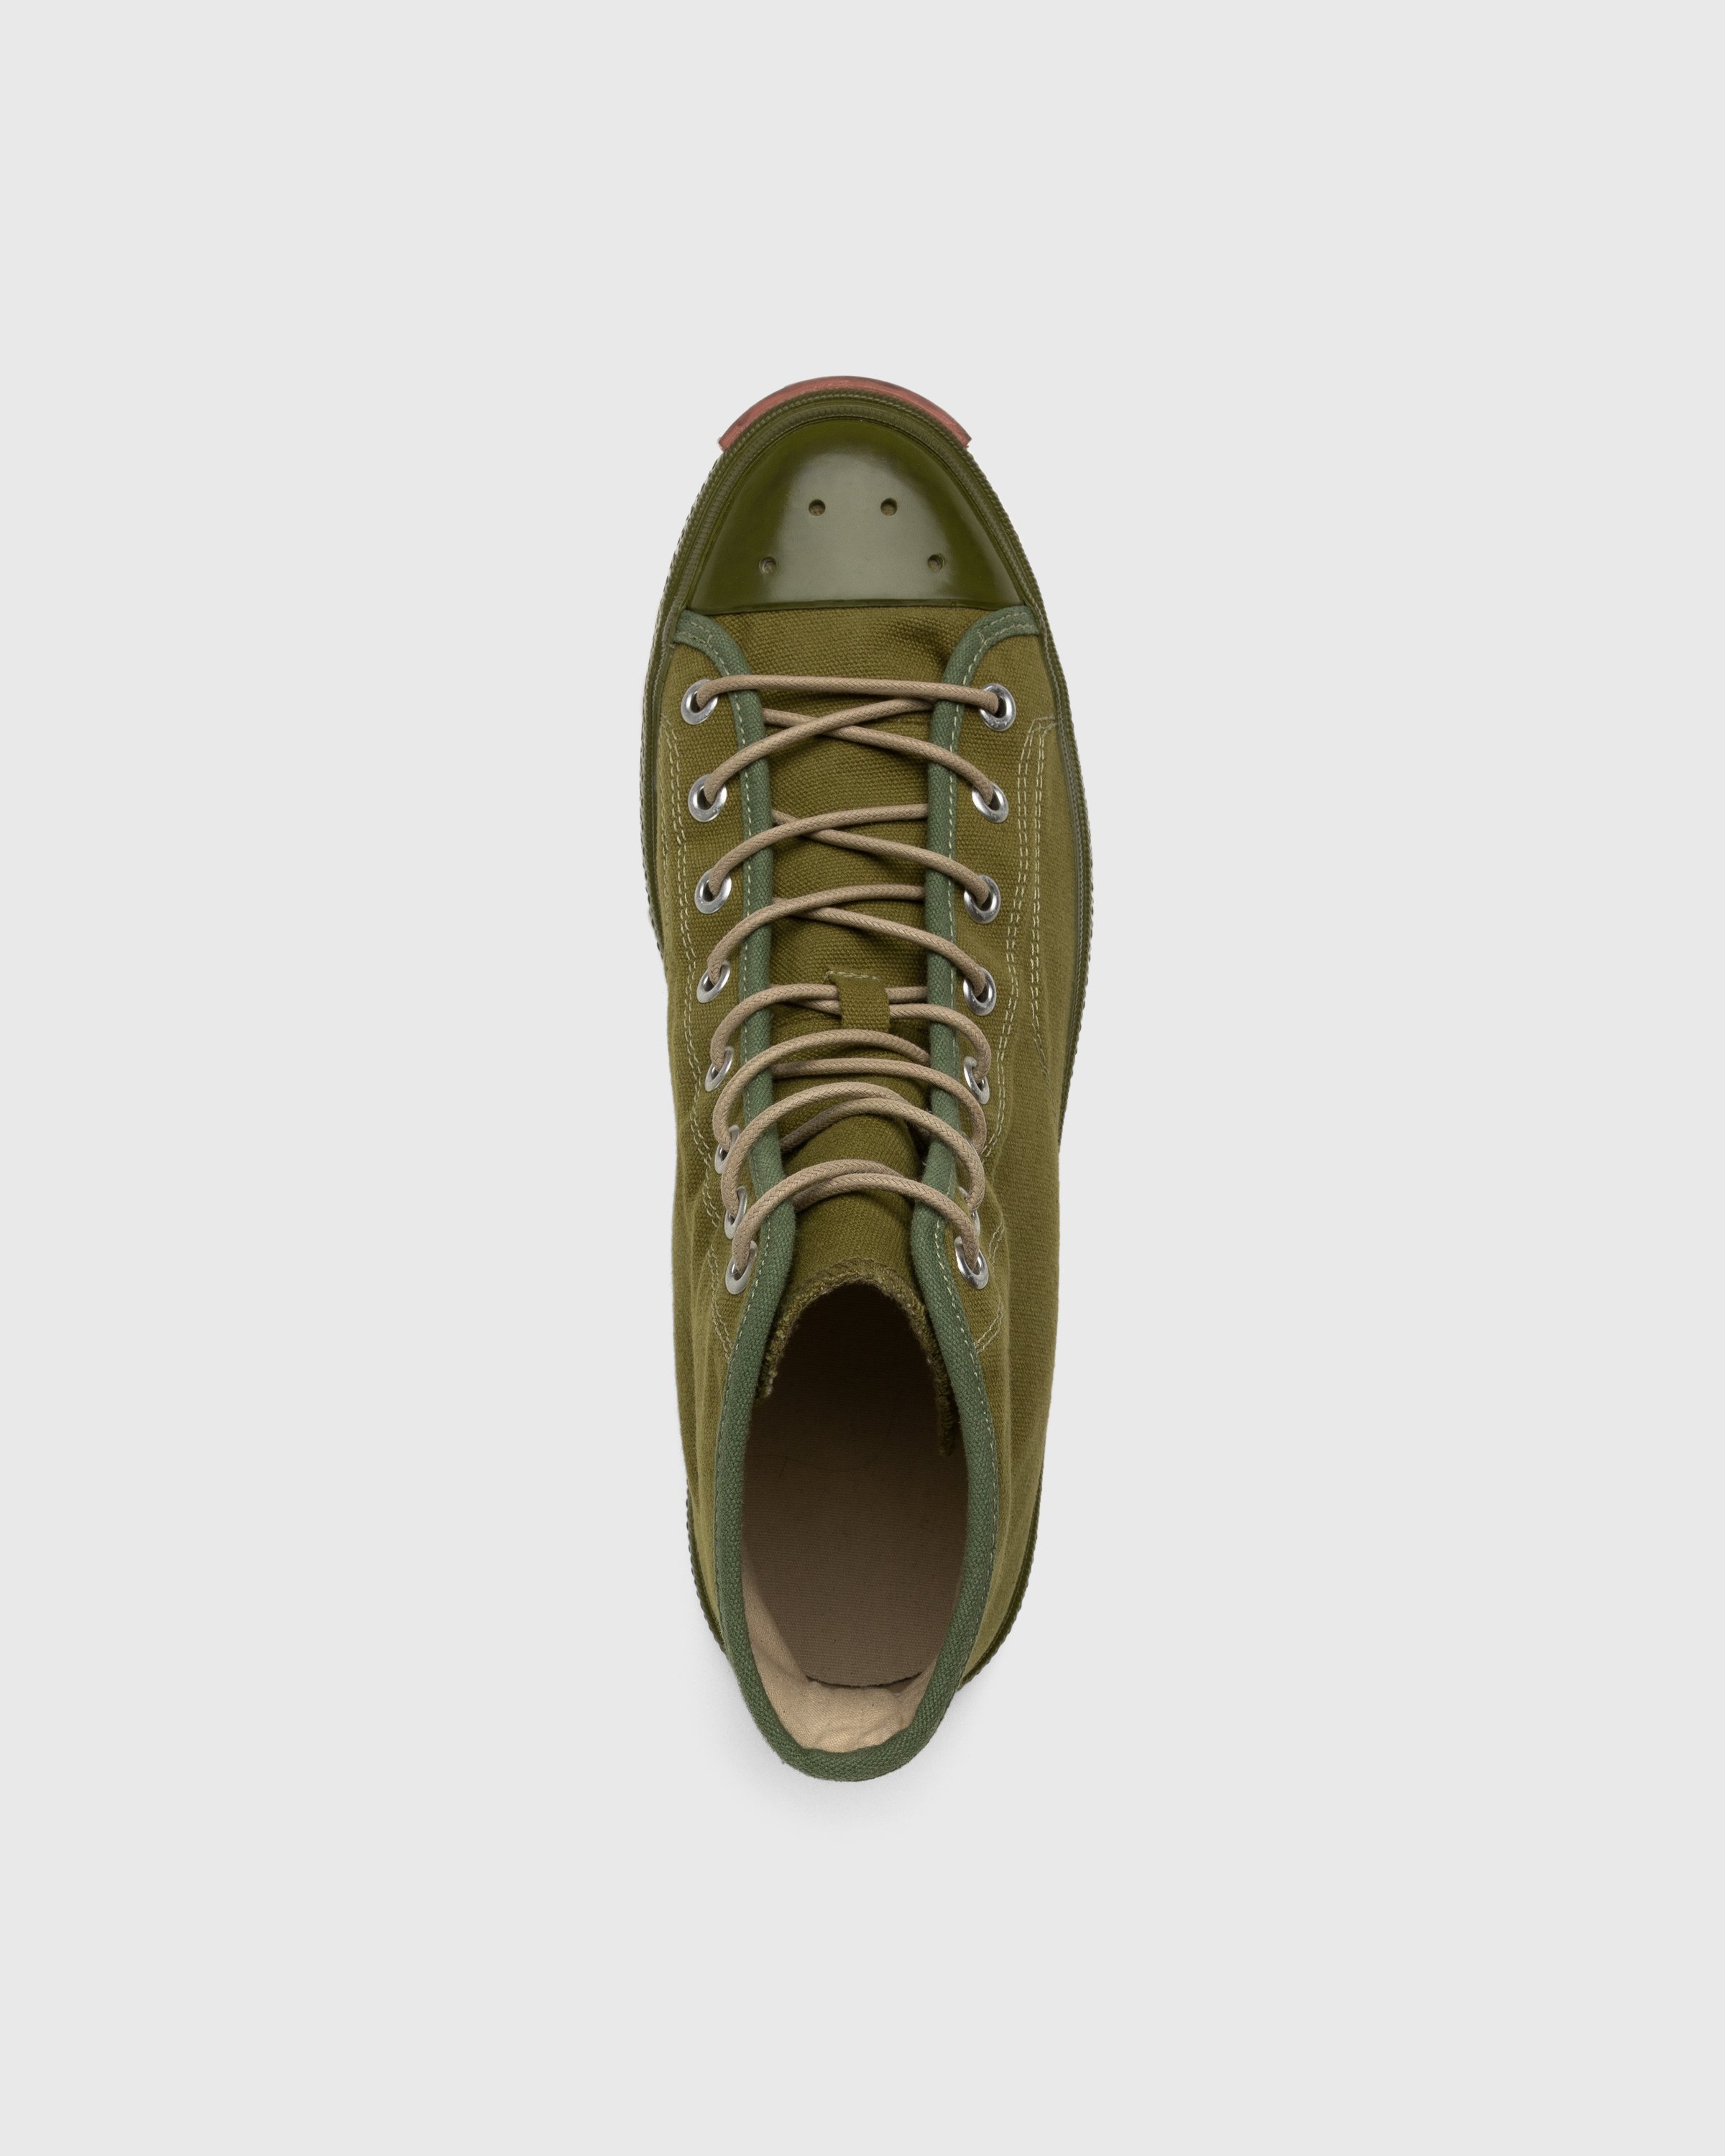 Acne Studios - Ballow High-Top Sneakers Olive Green - Footwear - Green - Image 5